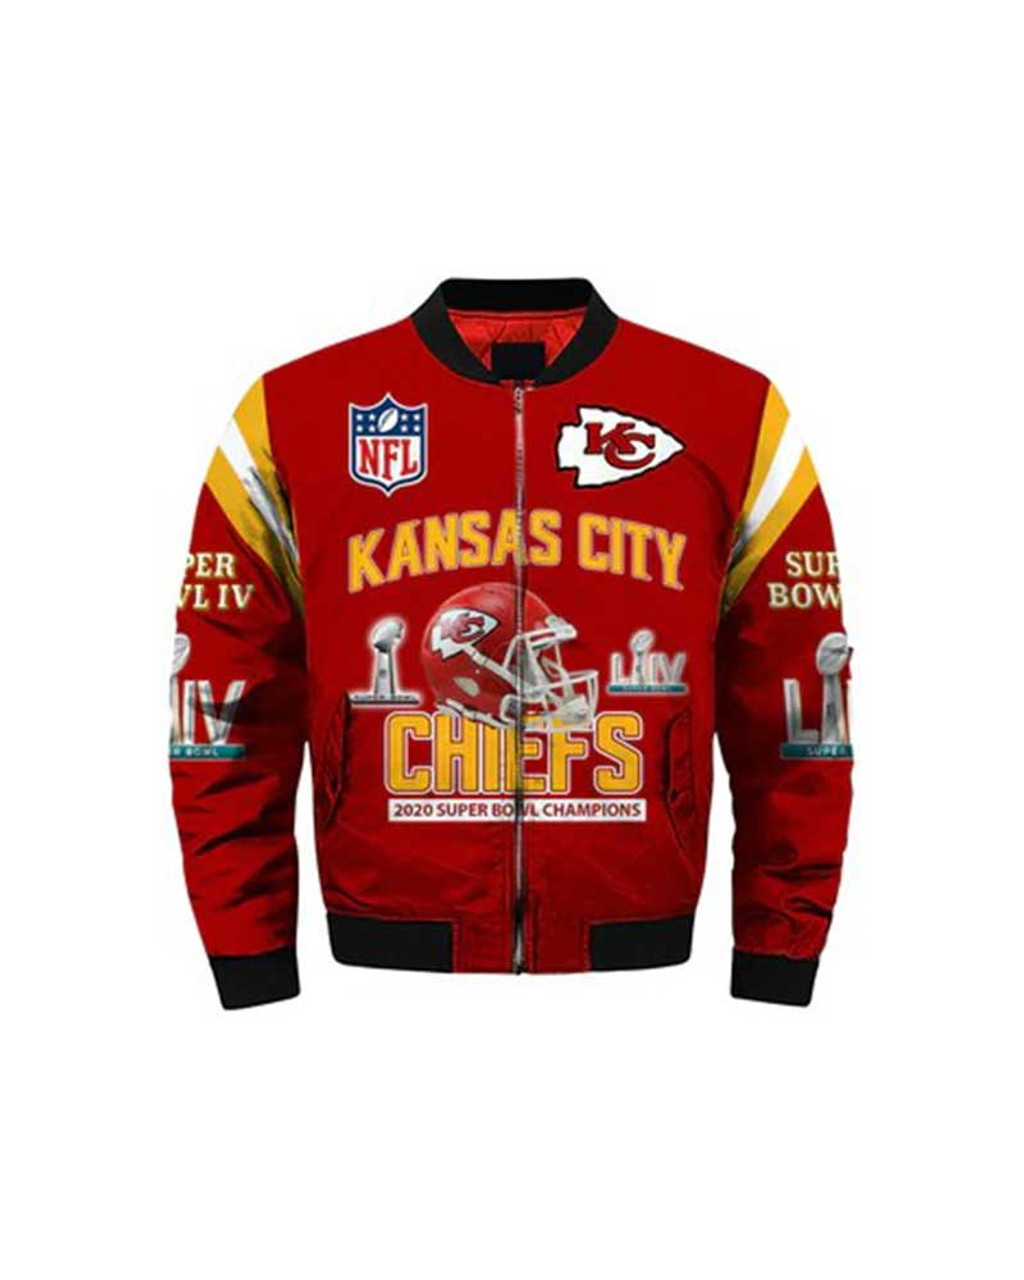 Kansas City Chiefs Super Bowl Champions Jacket